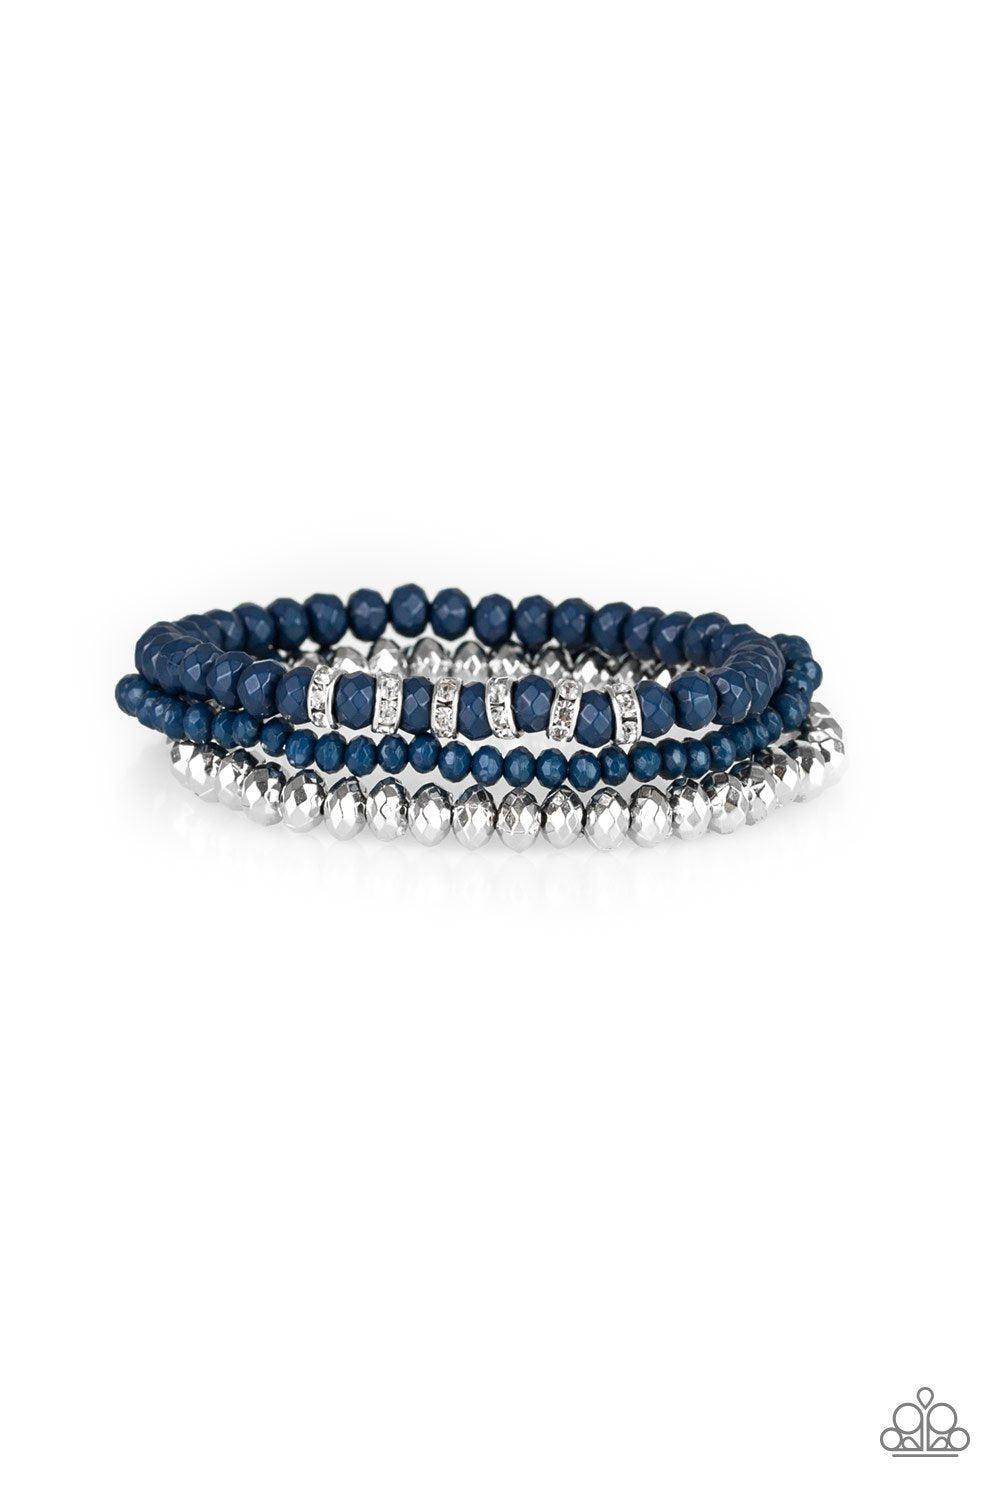 Ideal Idol Dark Blue and Silver Bracelet Set - Paparazzi Accessories-CarasShop.com - $5 Jewelry by Cara Jewels